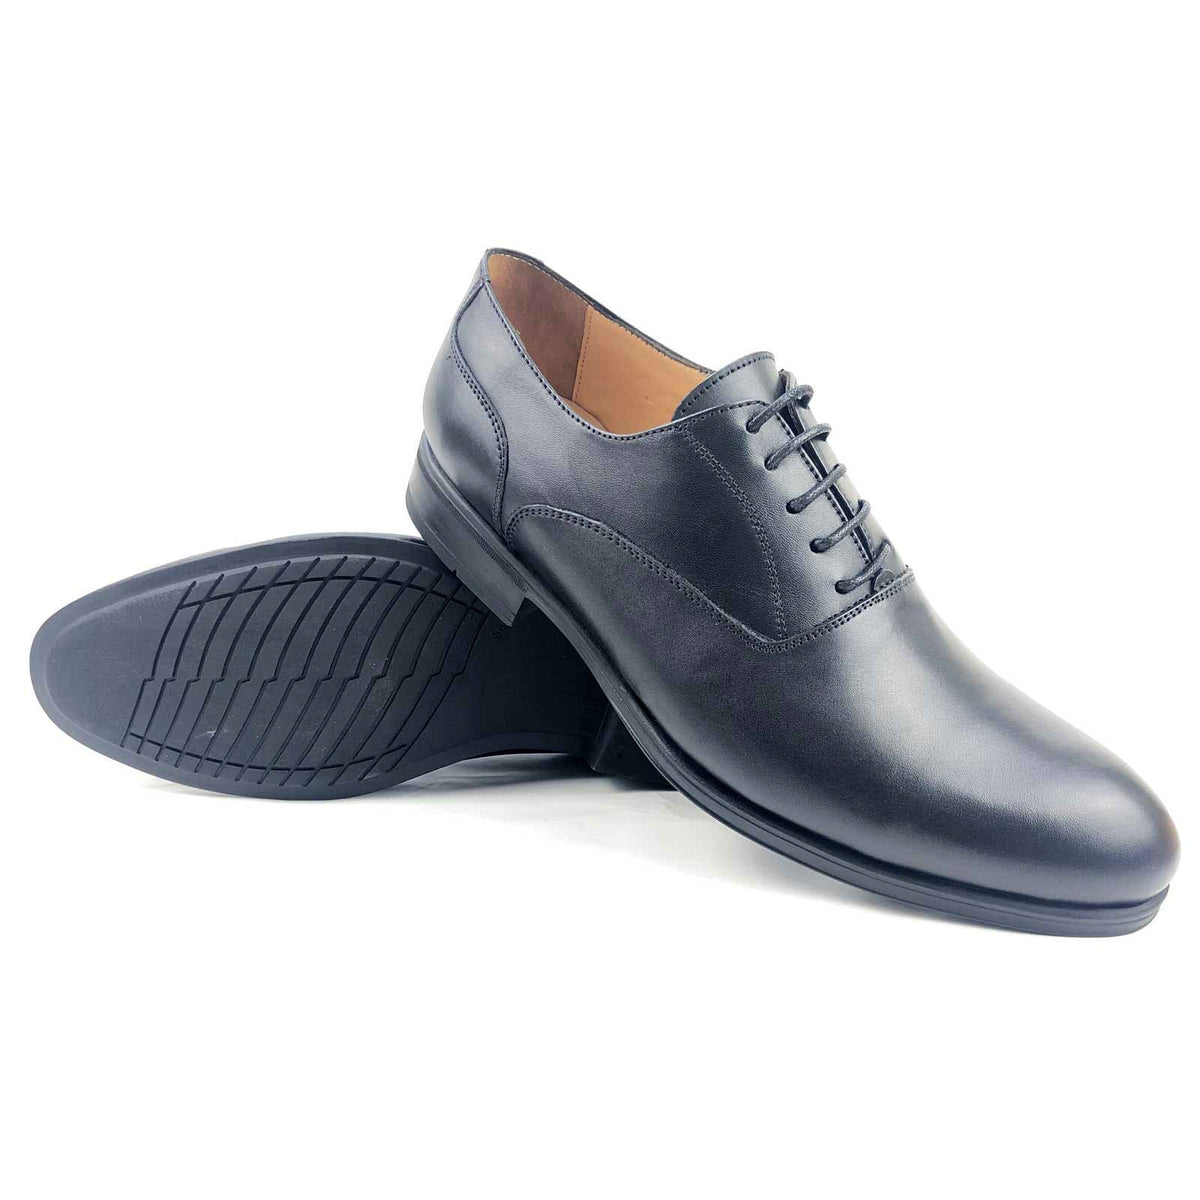 CH1336-015 - Chaussure cuir NOIR - deluxe-maroc